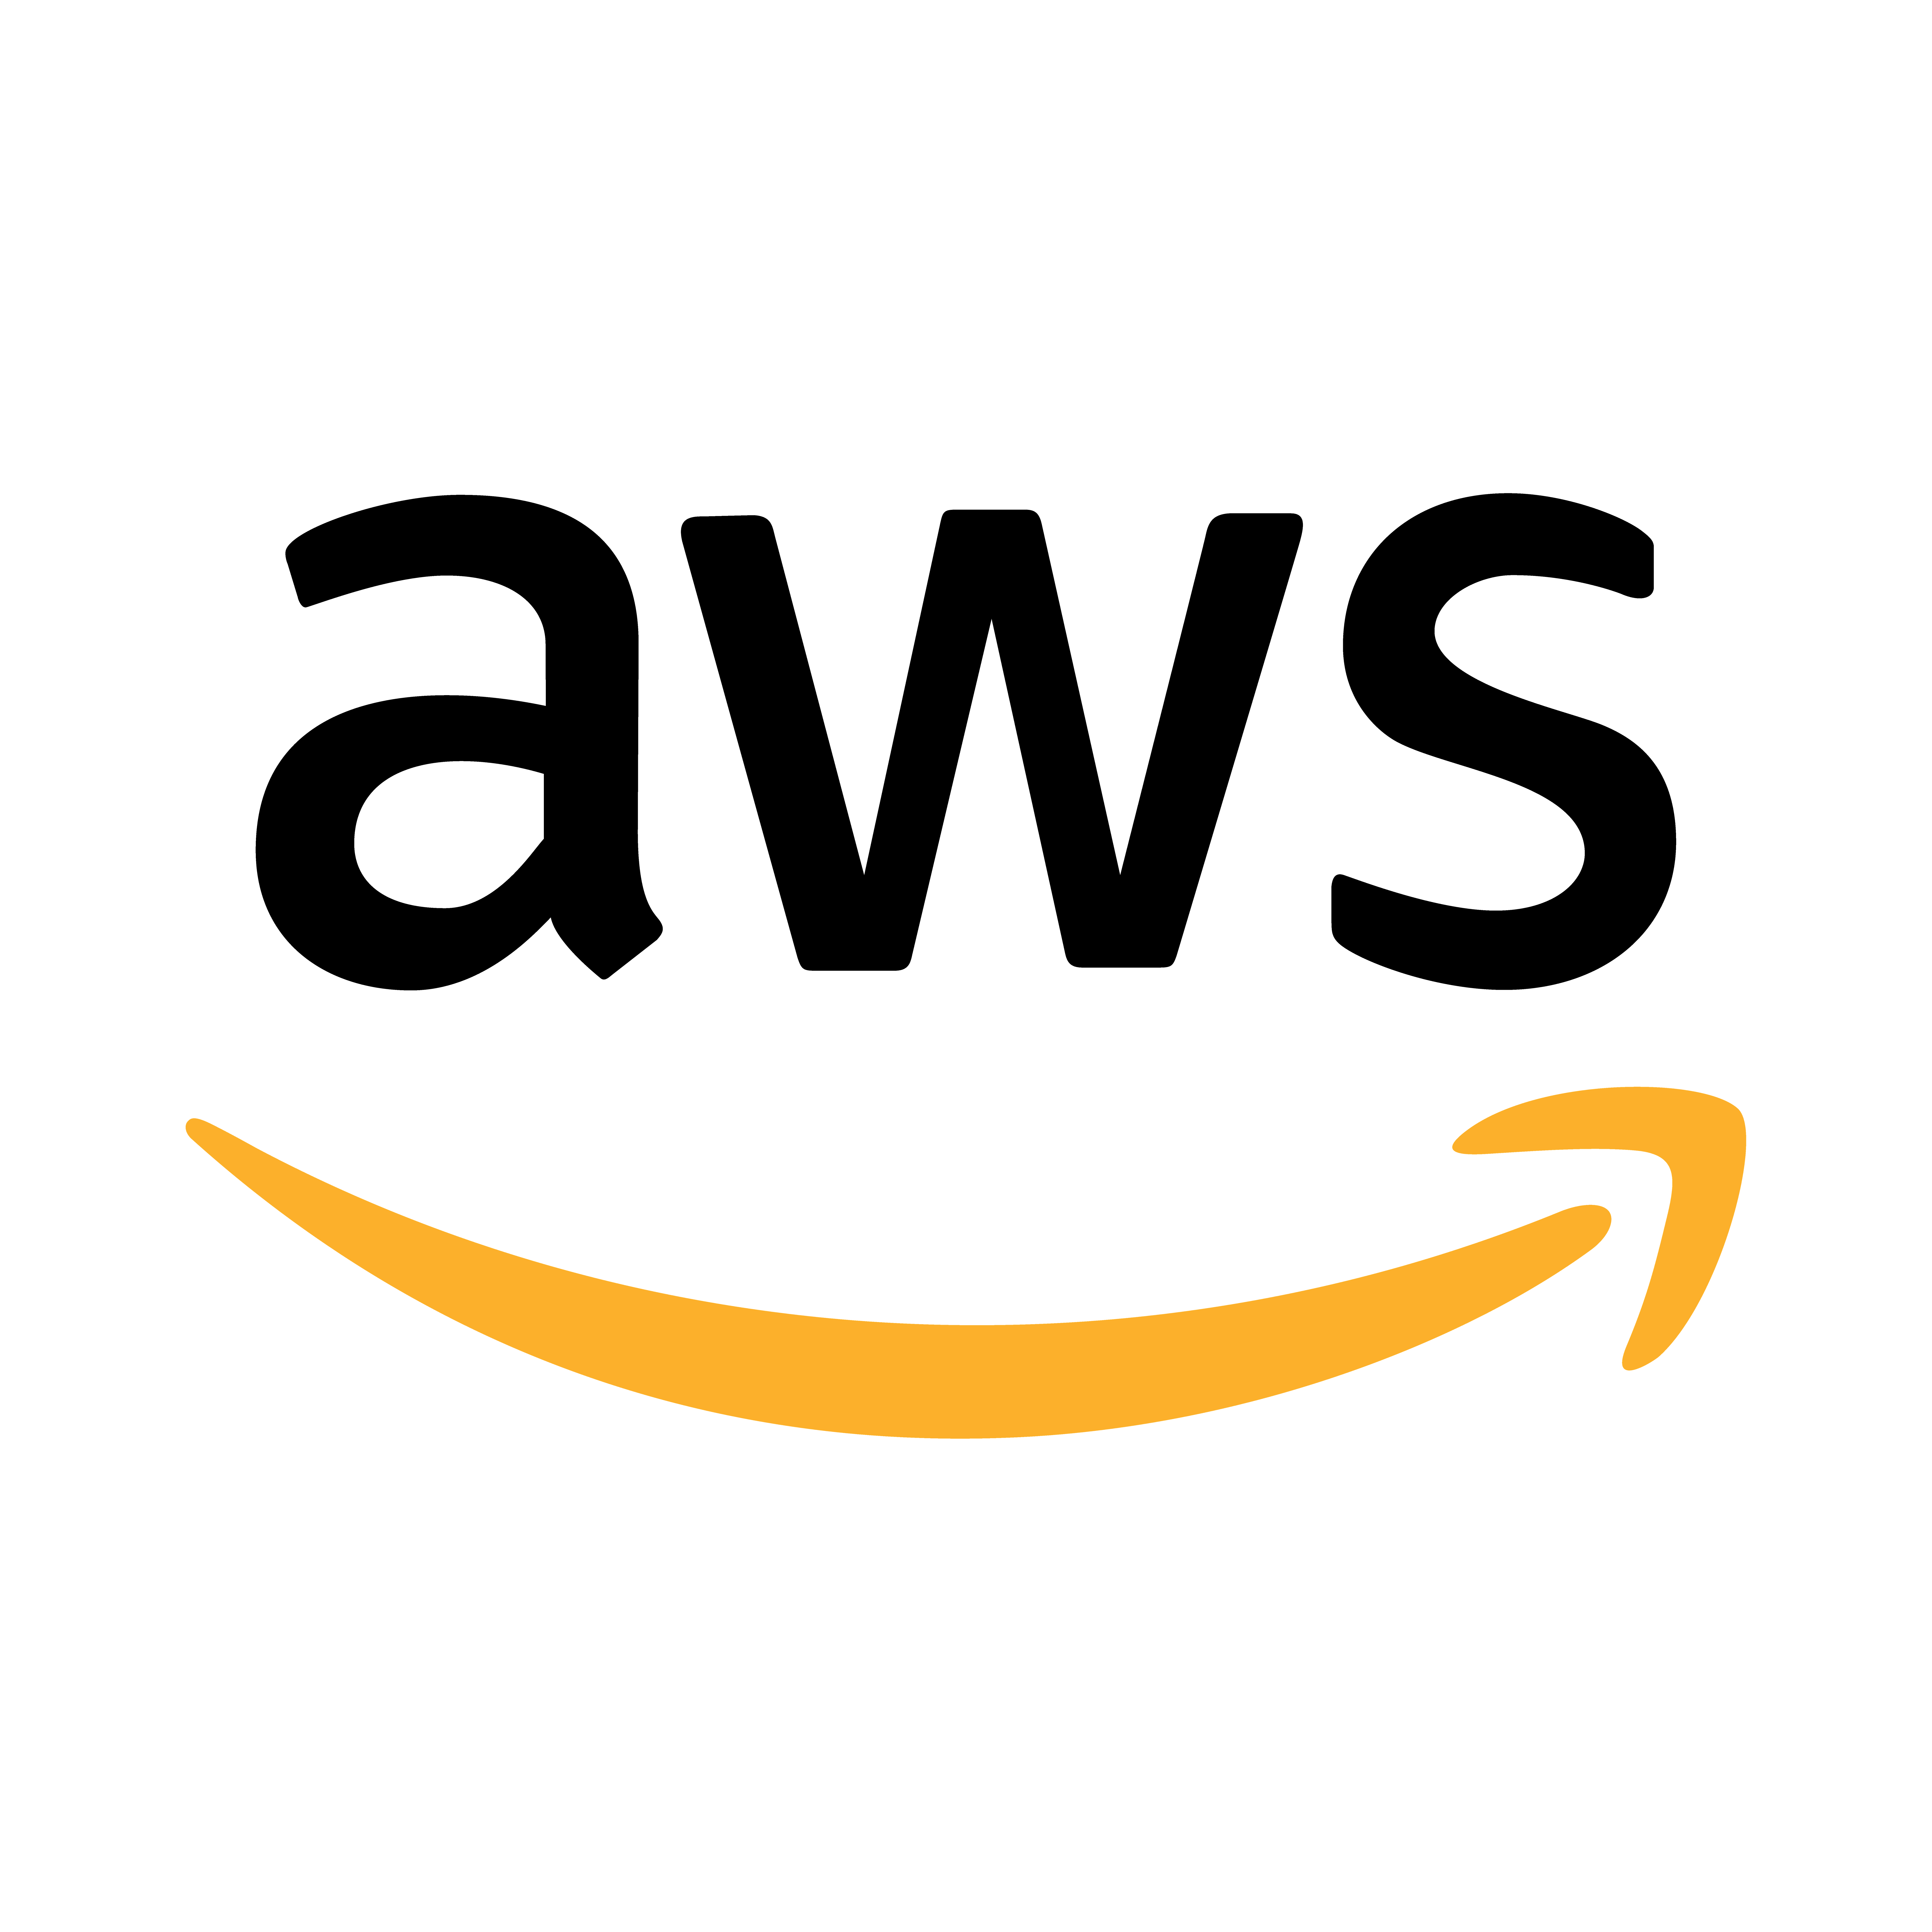 Amazon Webservices